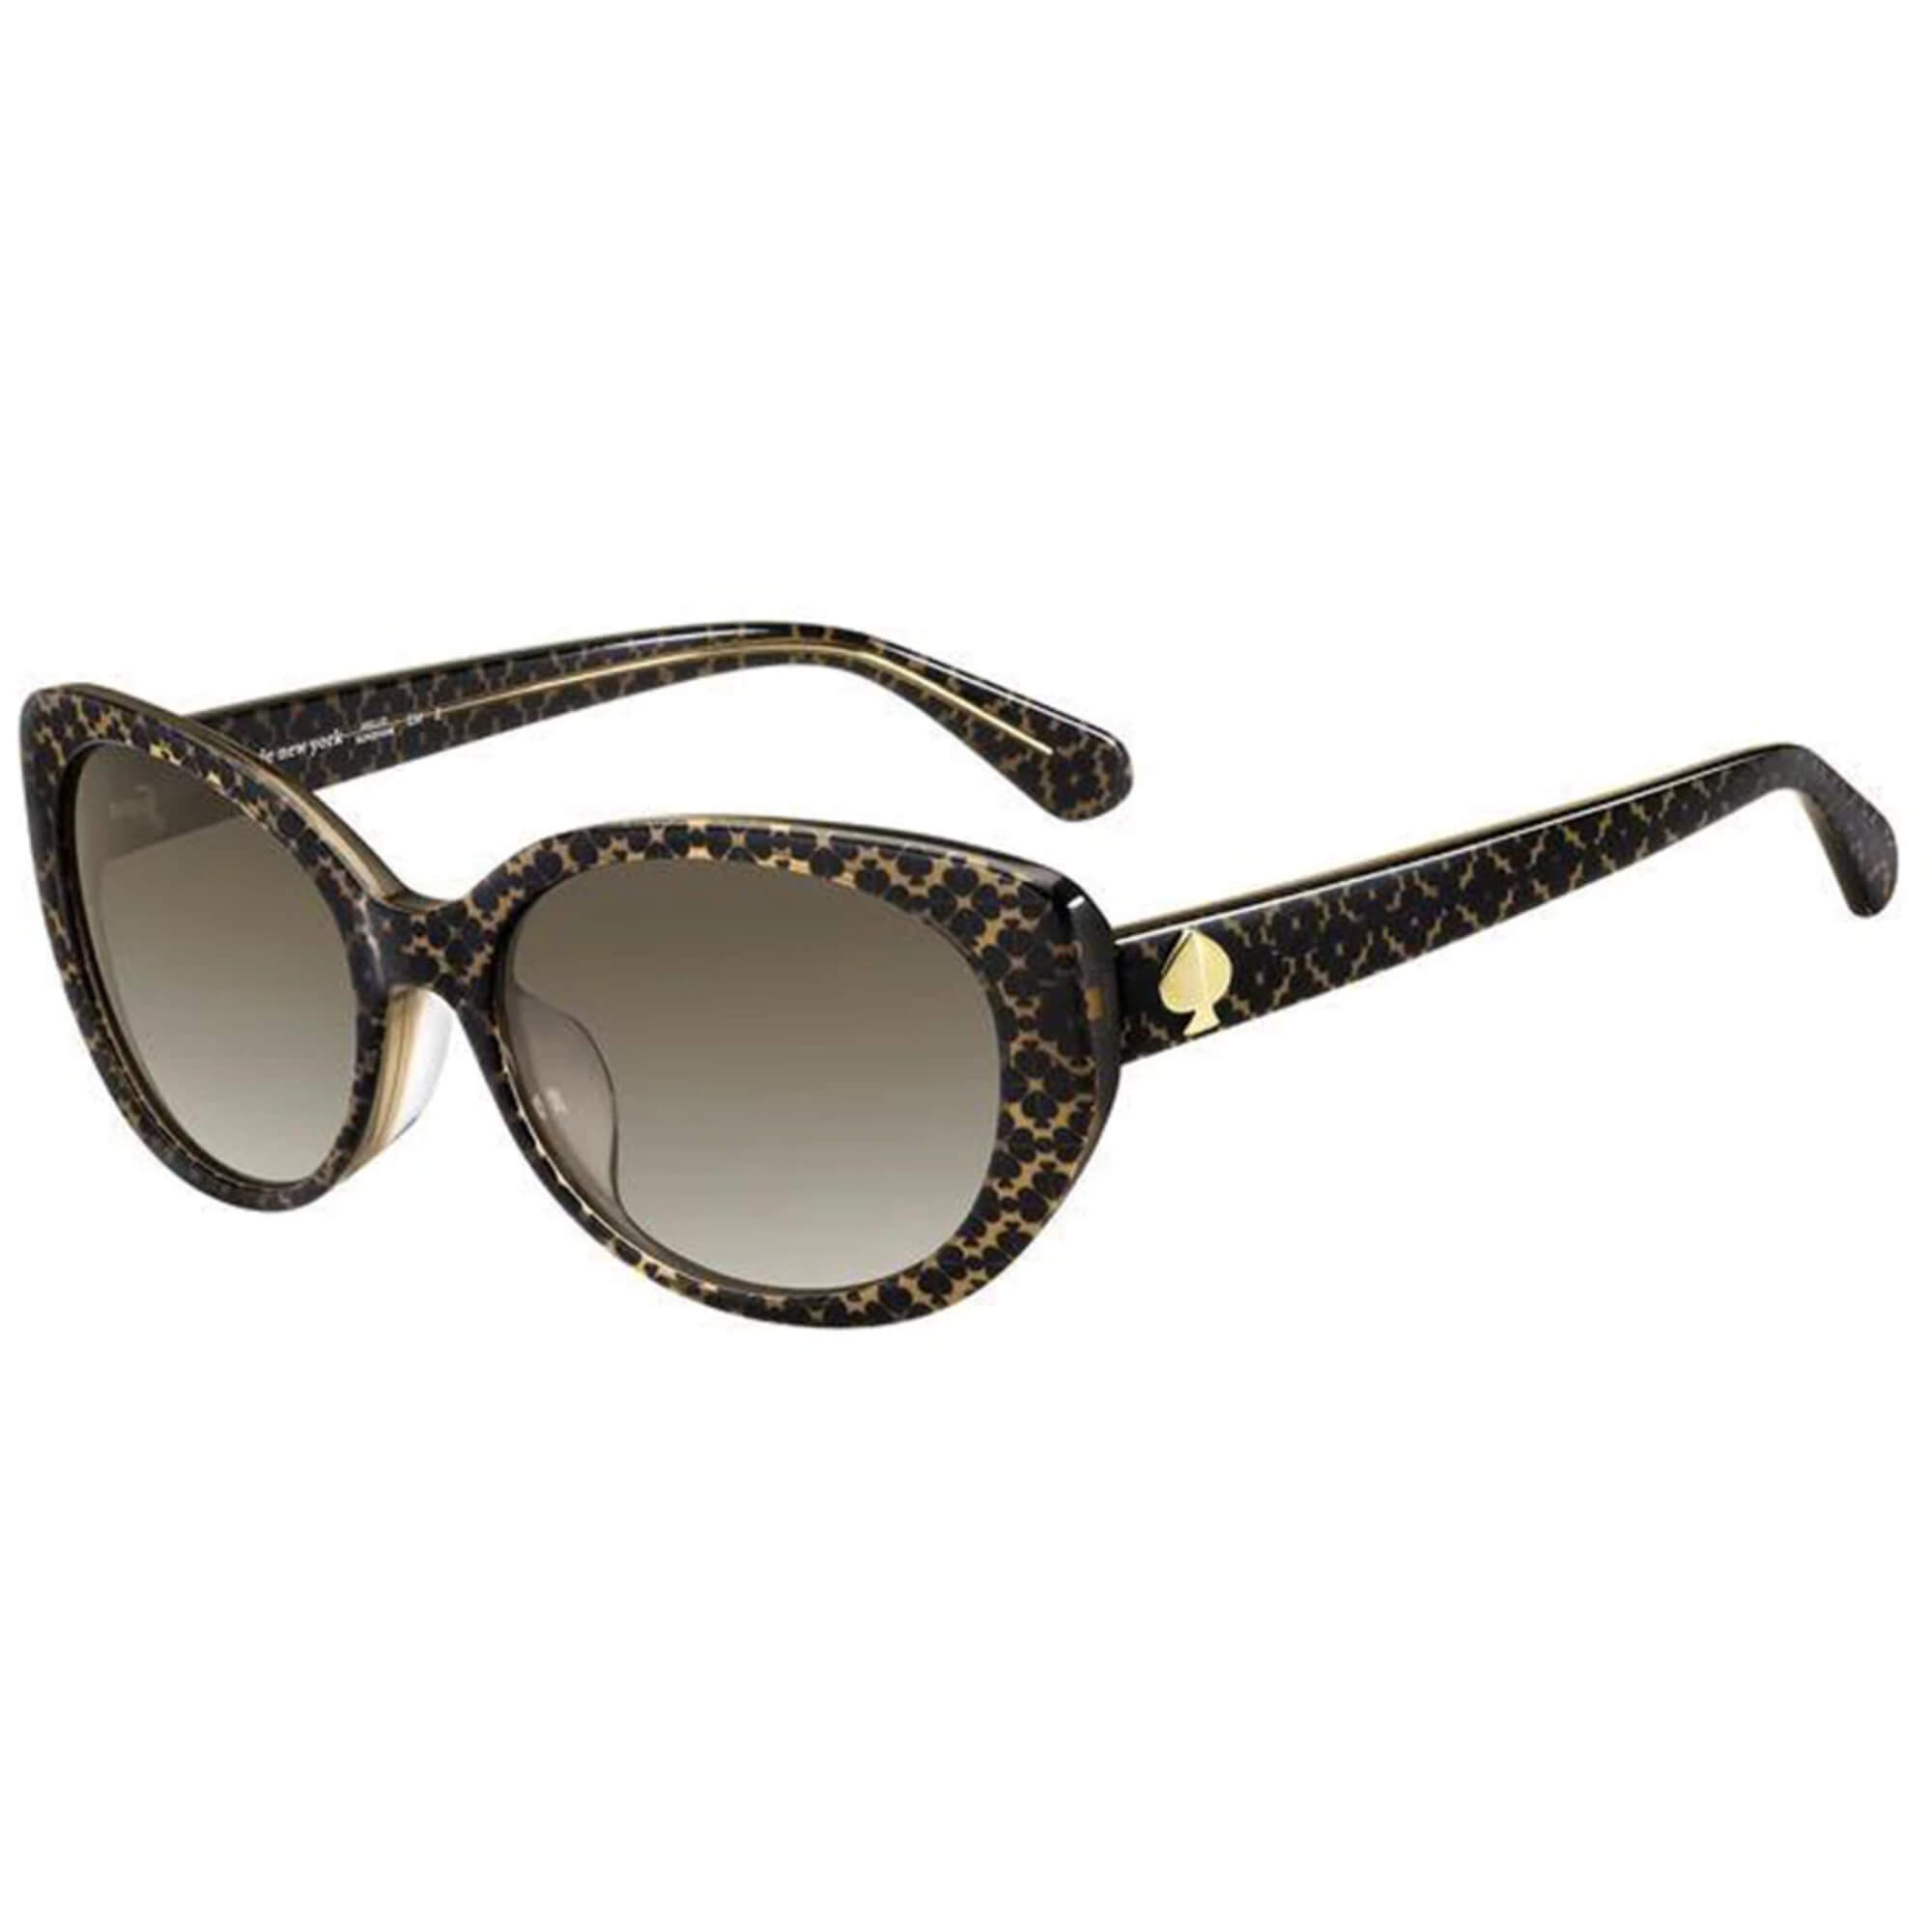 Kate Spade EVERETT F/S 04Q8 Women's Cat Eye Frame Fashion Sunglasses - image 1 of 3